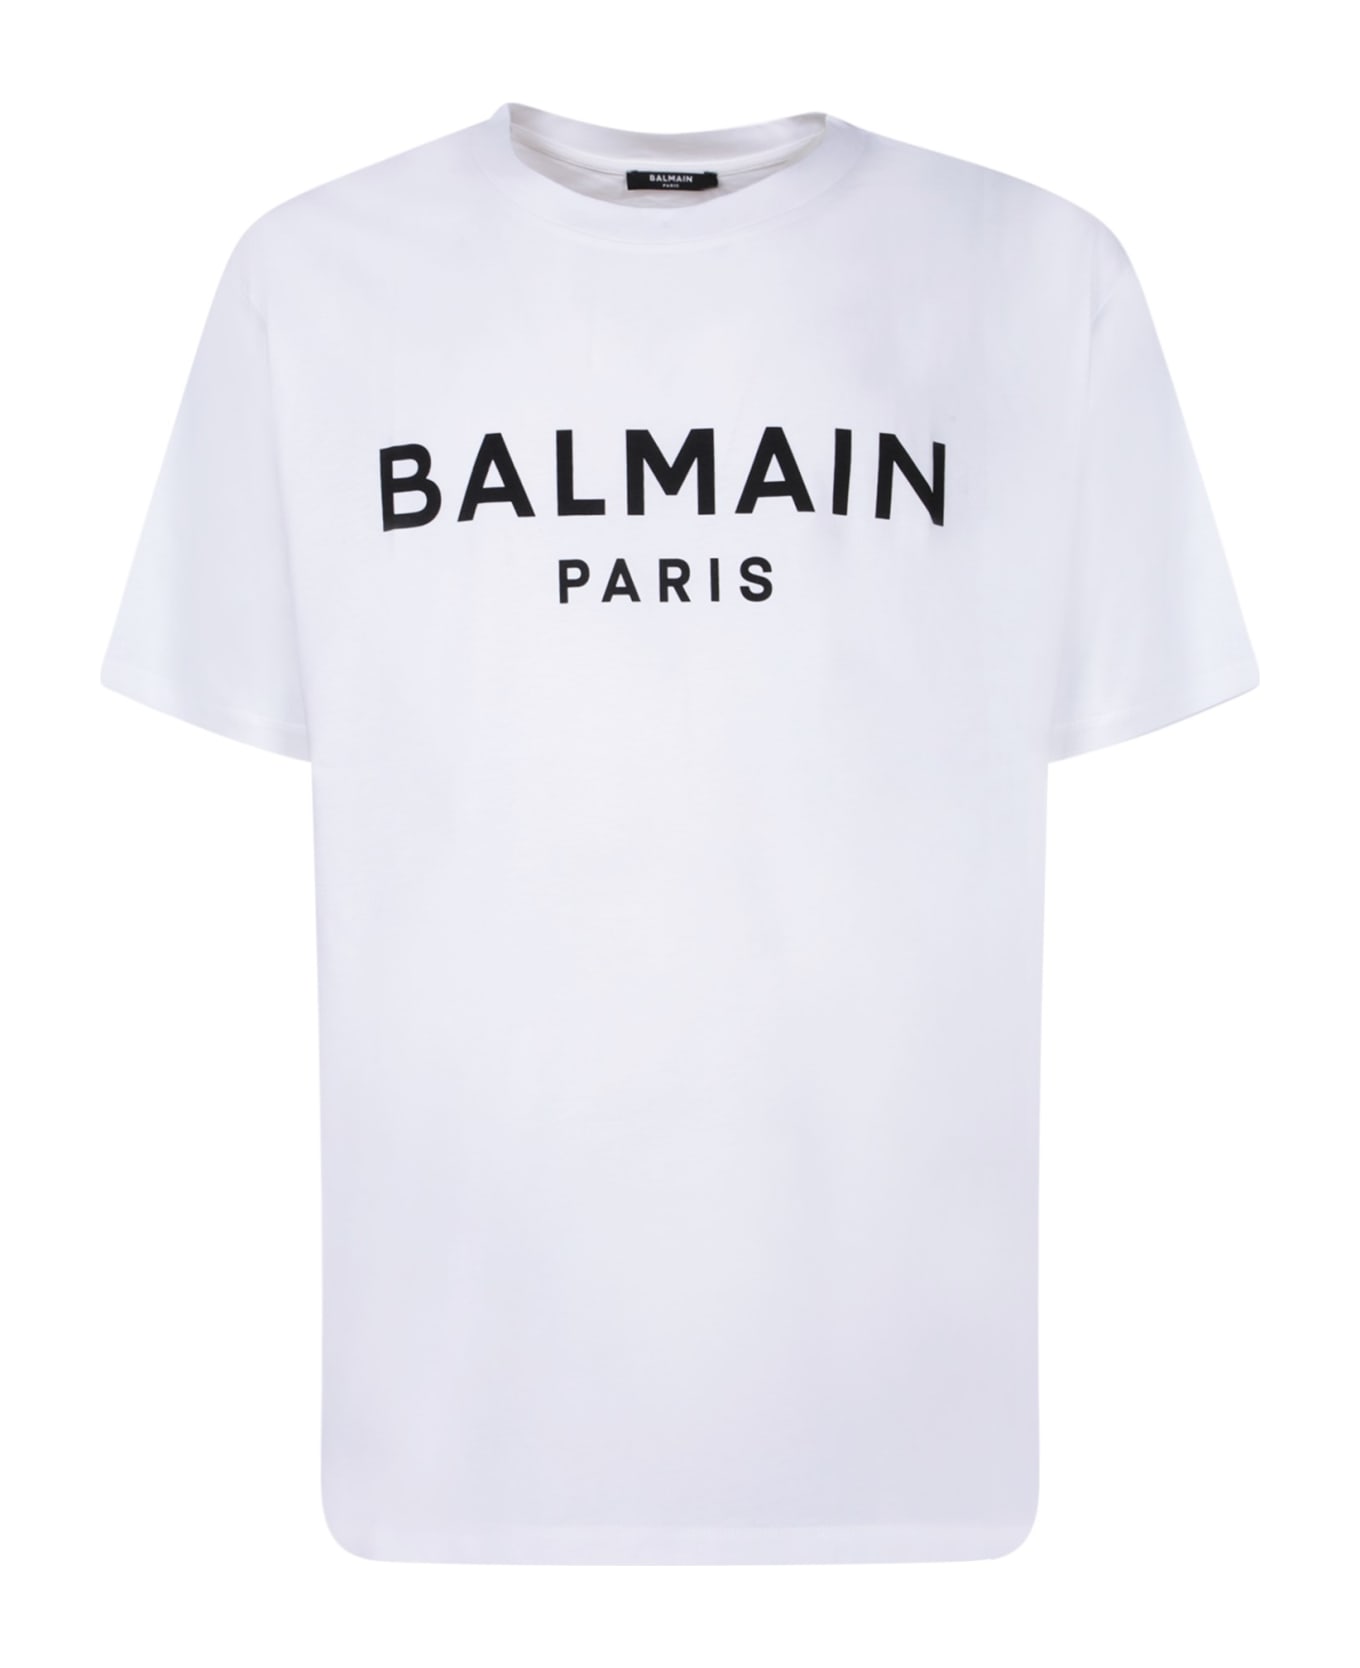 Balmain Logo White T-shirt - White